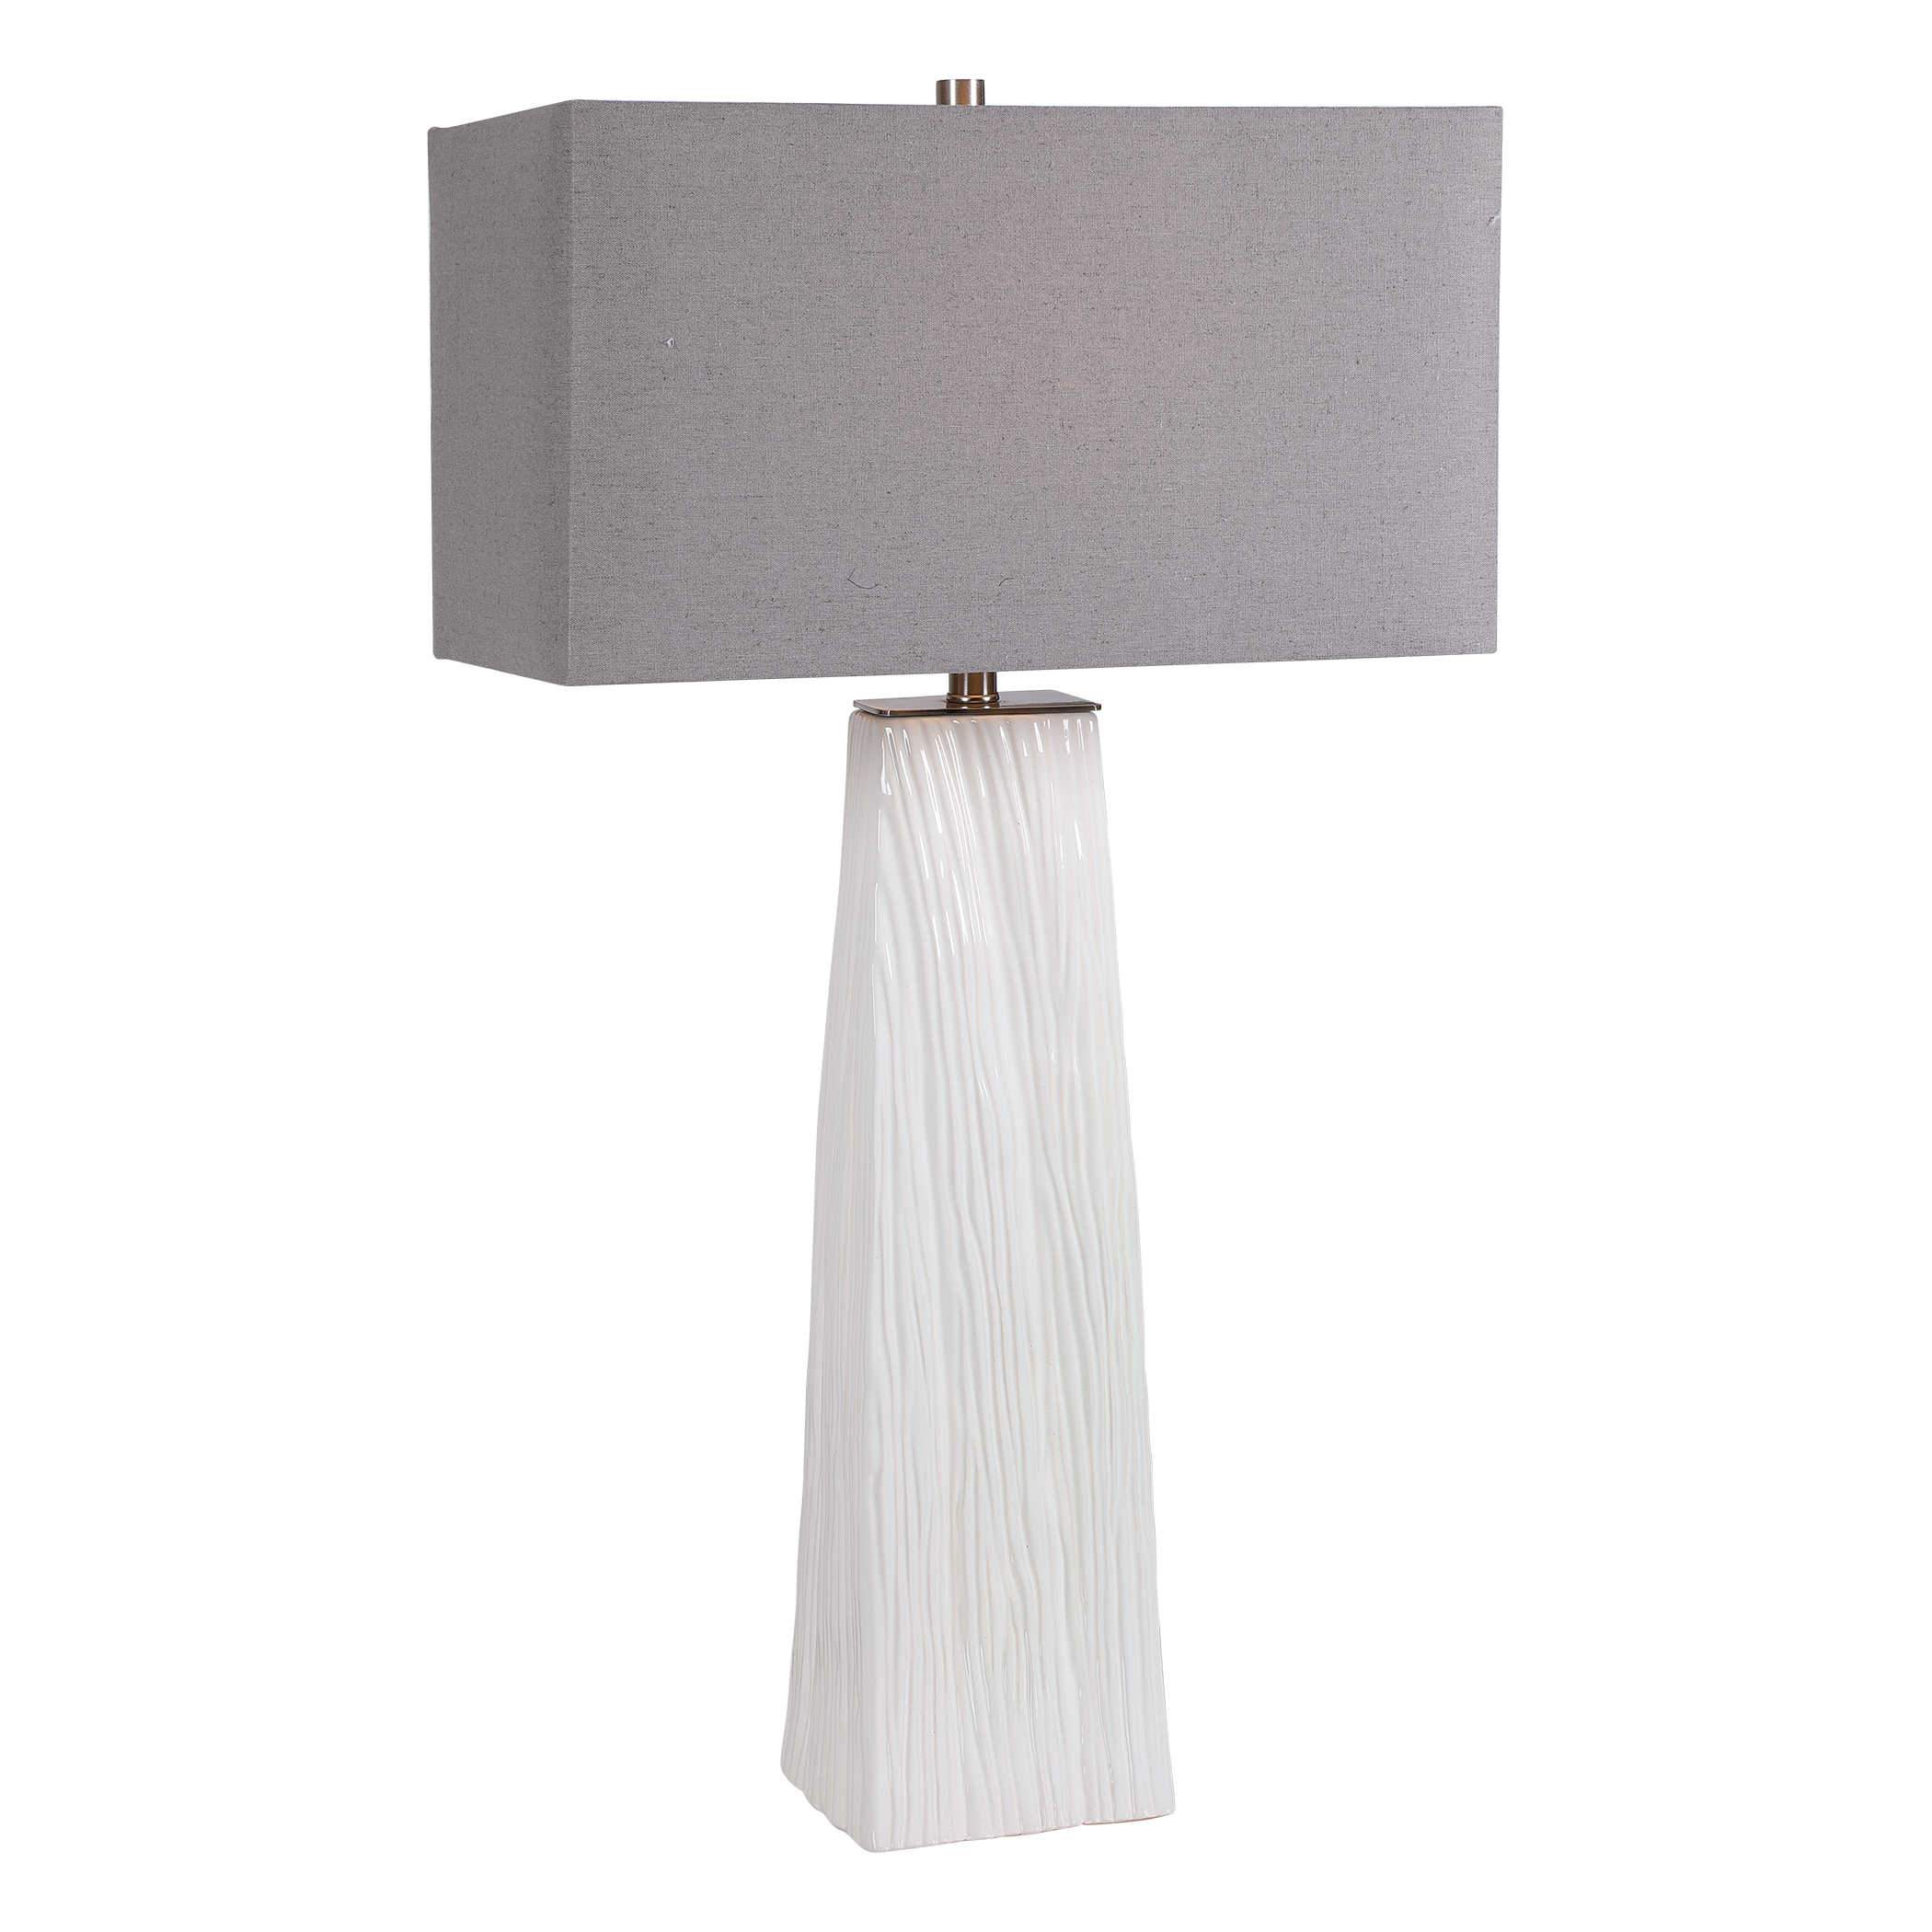 Uttermost Lighting Uttermost Sycamore Table Lamp - Shipping November